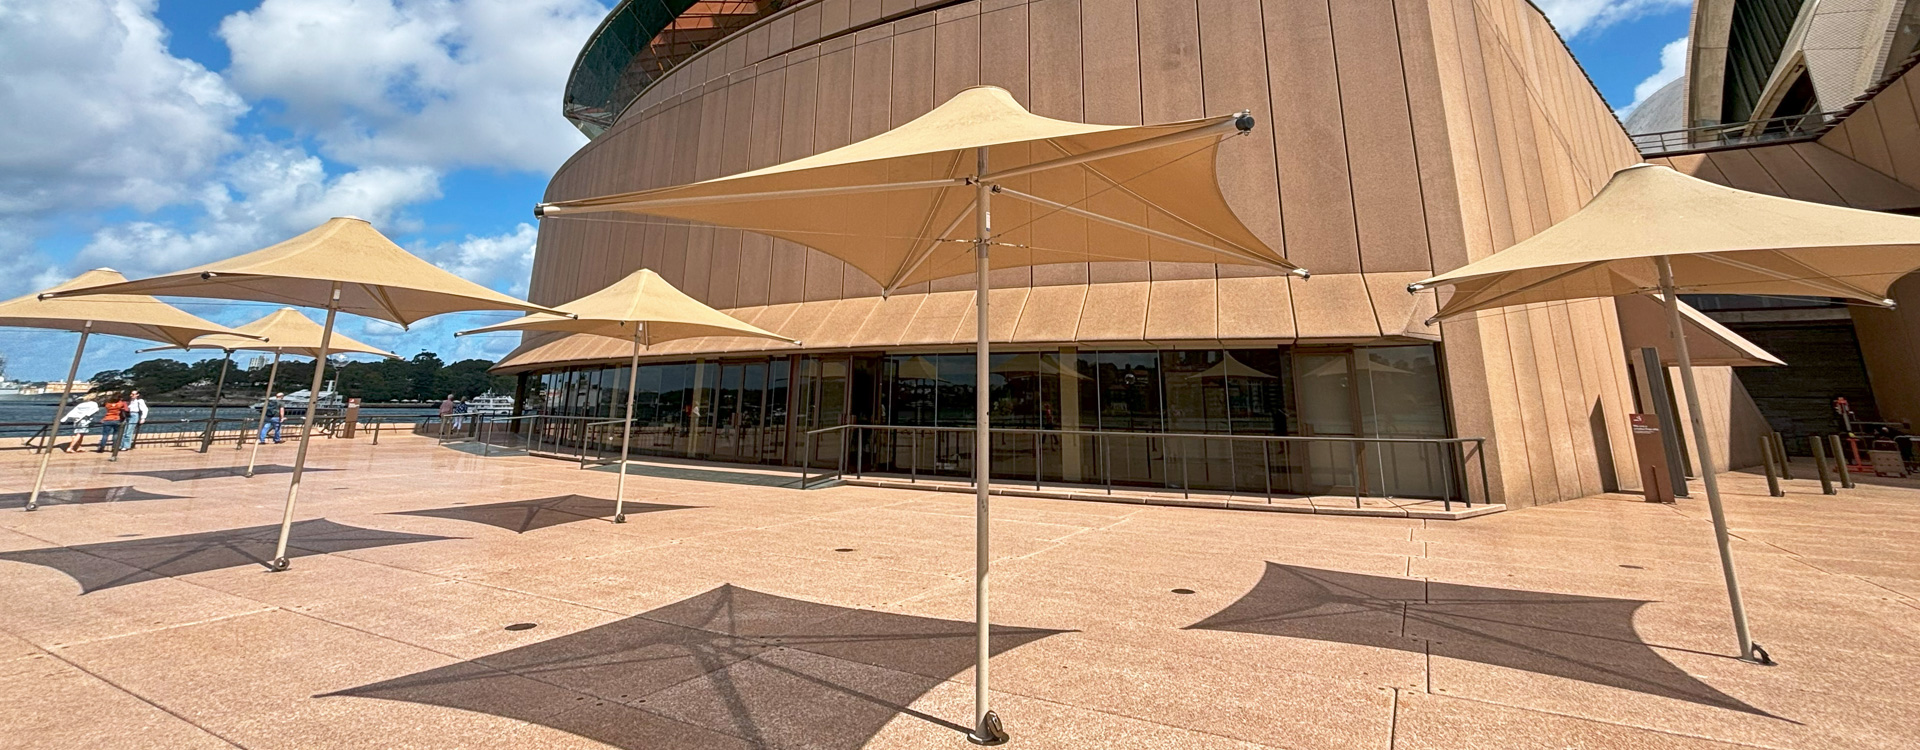 Opera House Function Centre Umbrellas